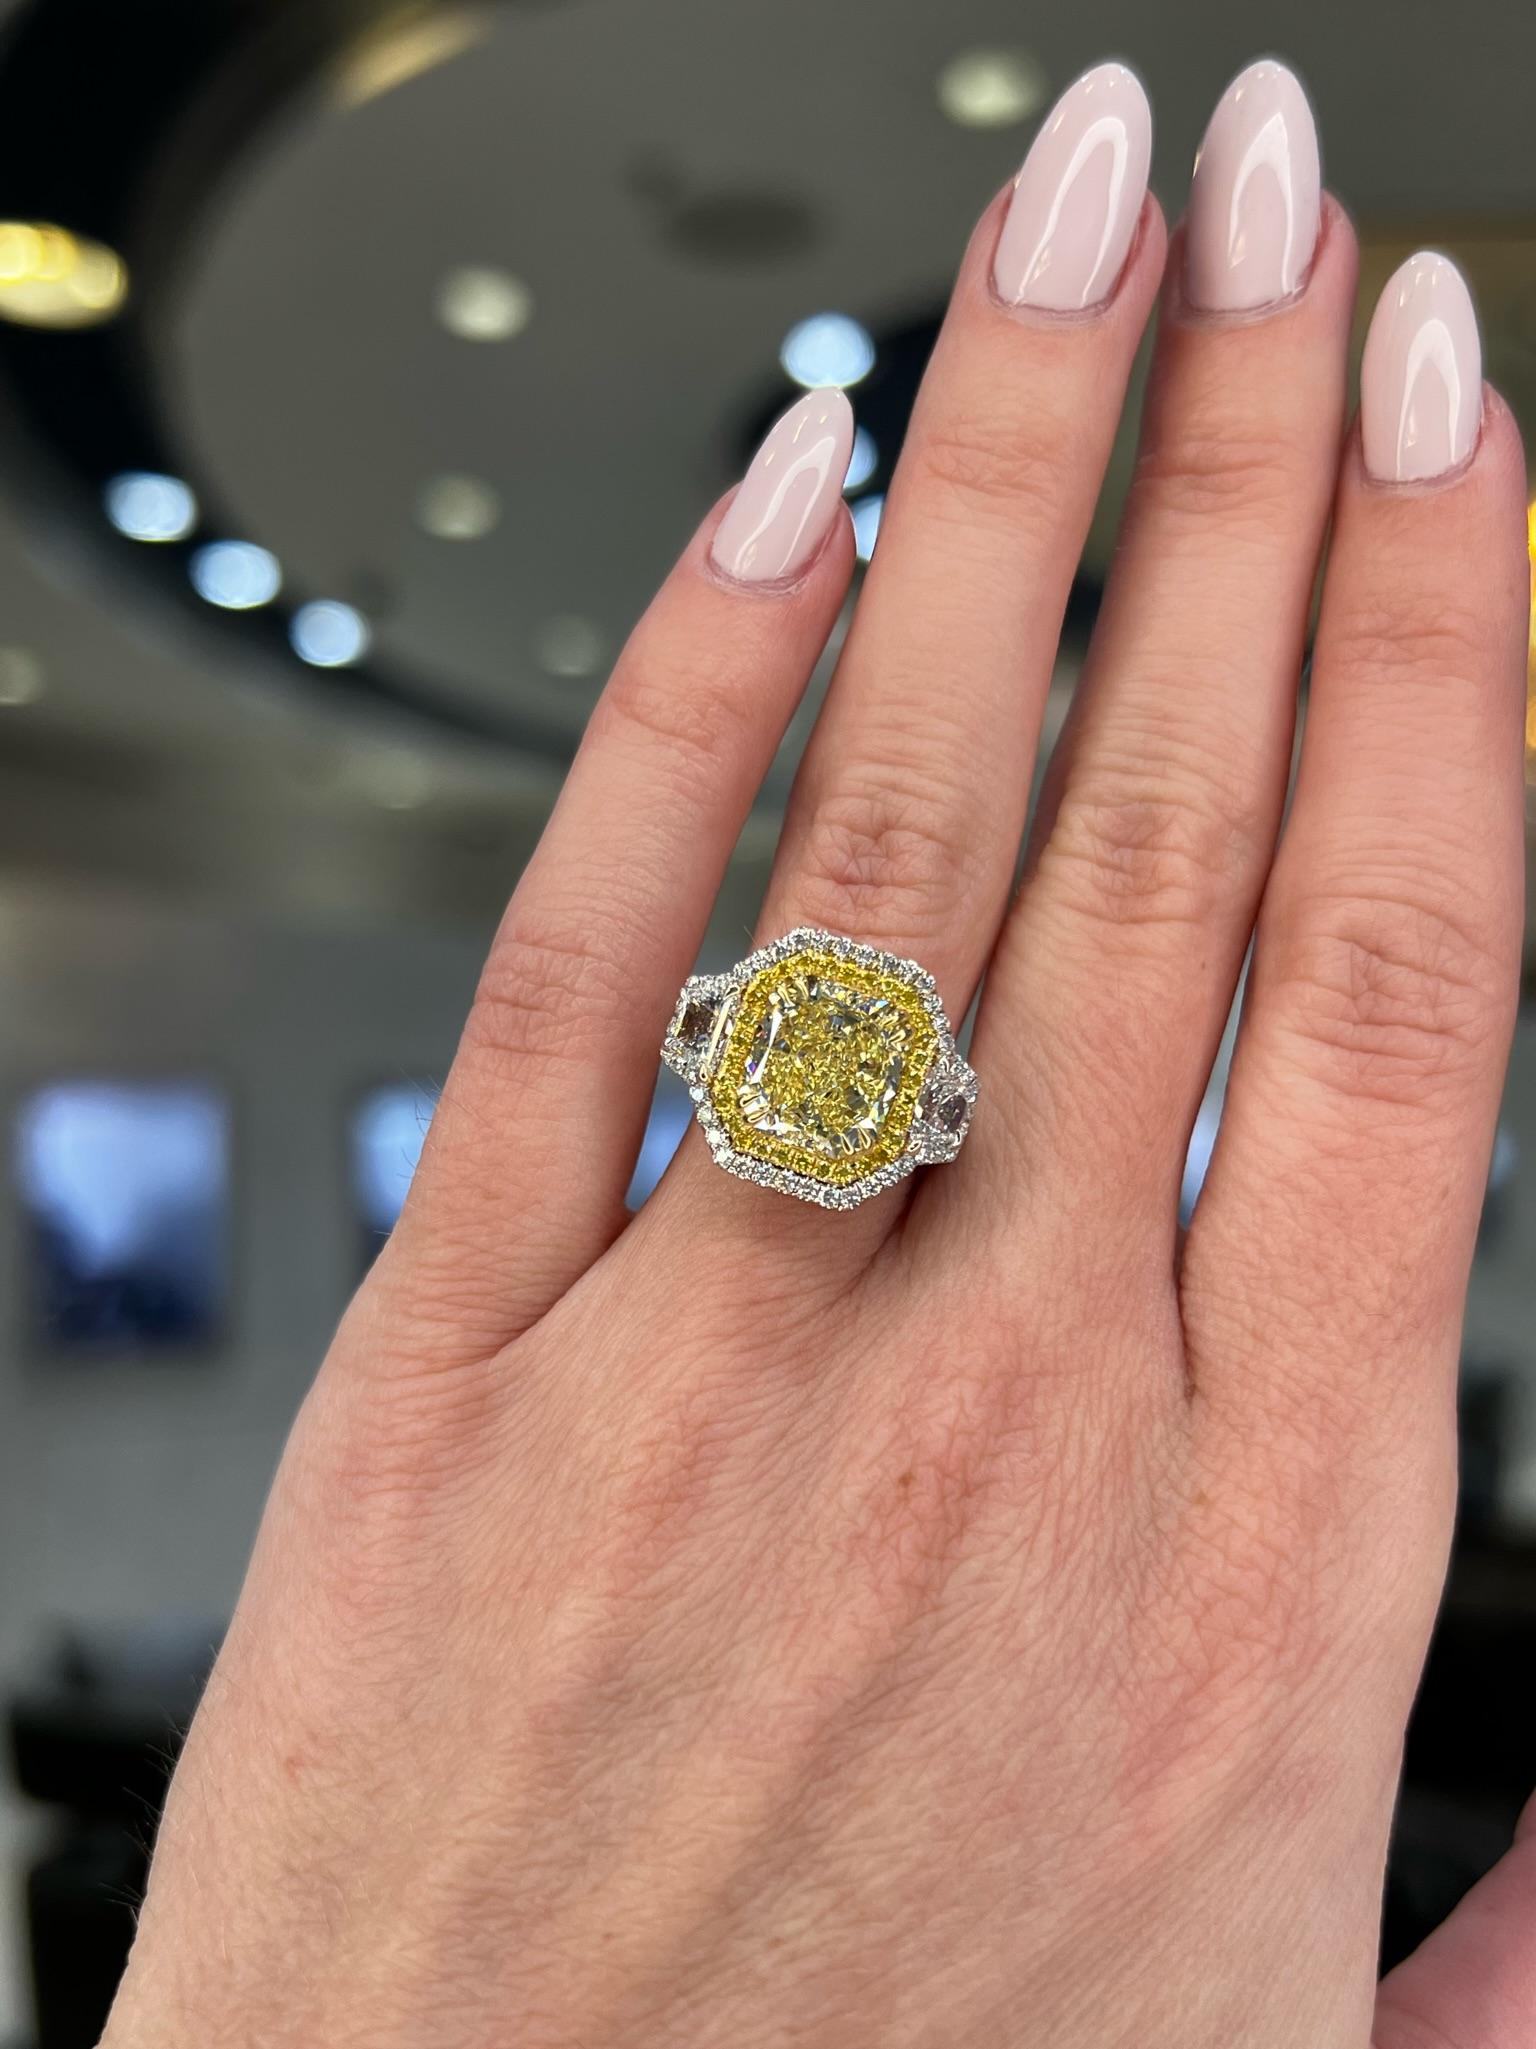 David Rosenberg 3.67 Carat Radiant Fancy Yellow VVS2 GIA Diamond Engagement Ring For Sale 7